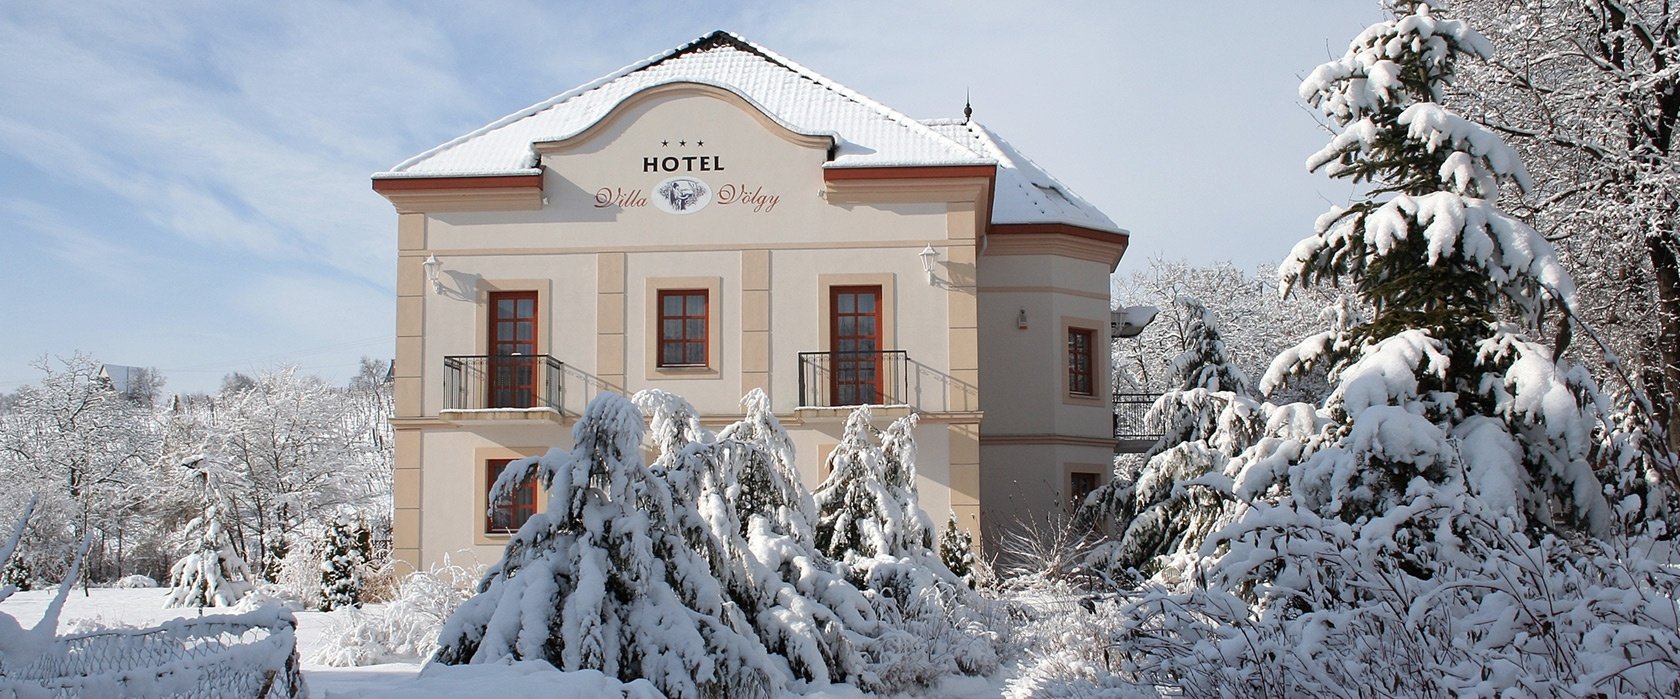 Hotel Villa Volgy Eger Hungary